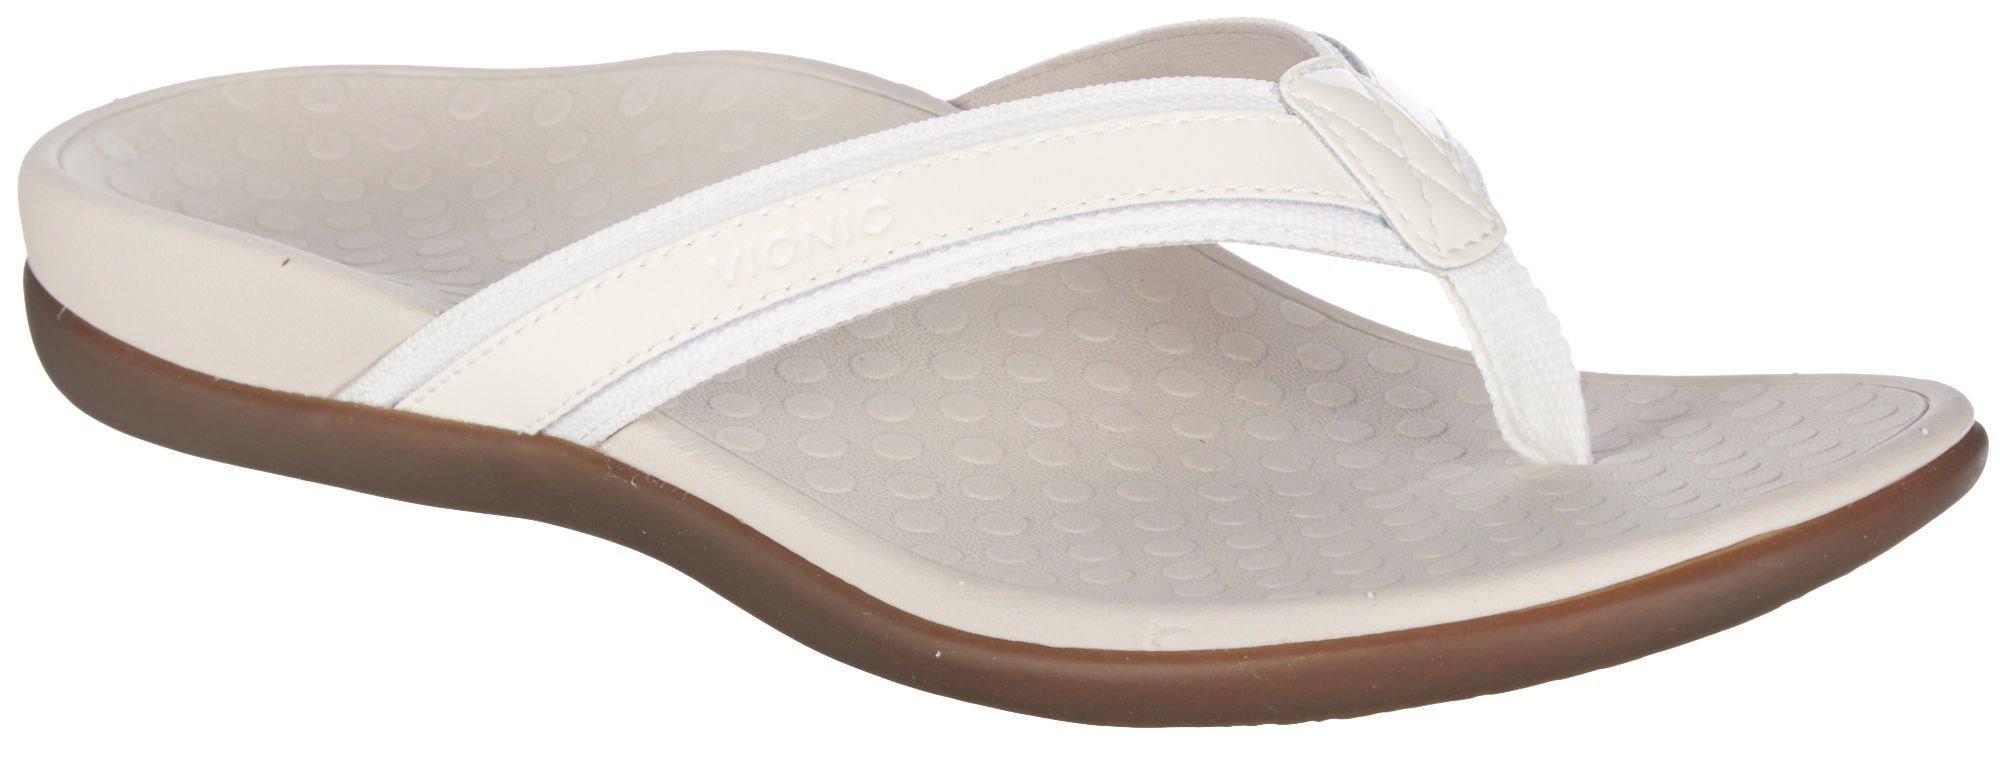 white vionic sandals on sale